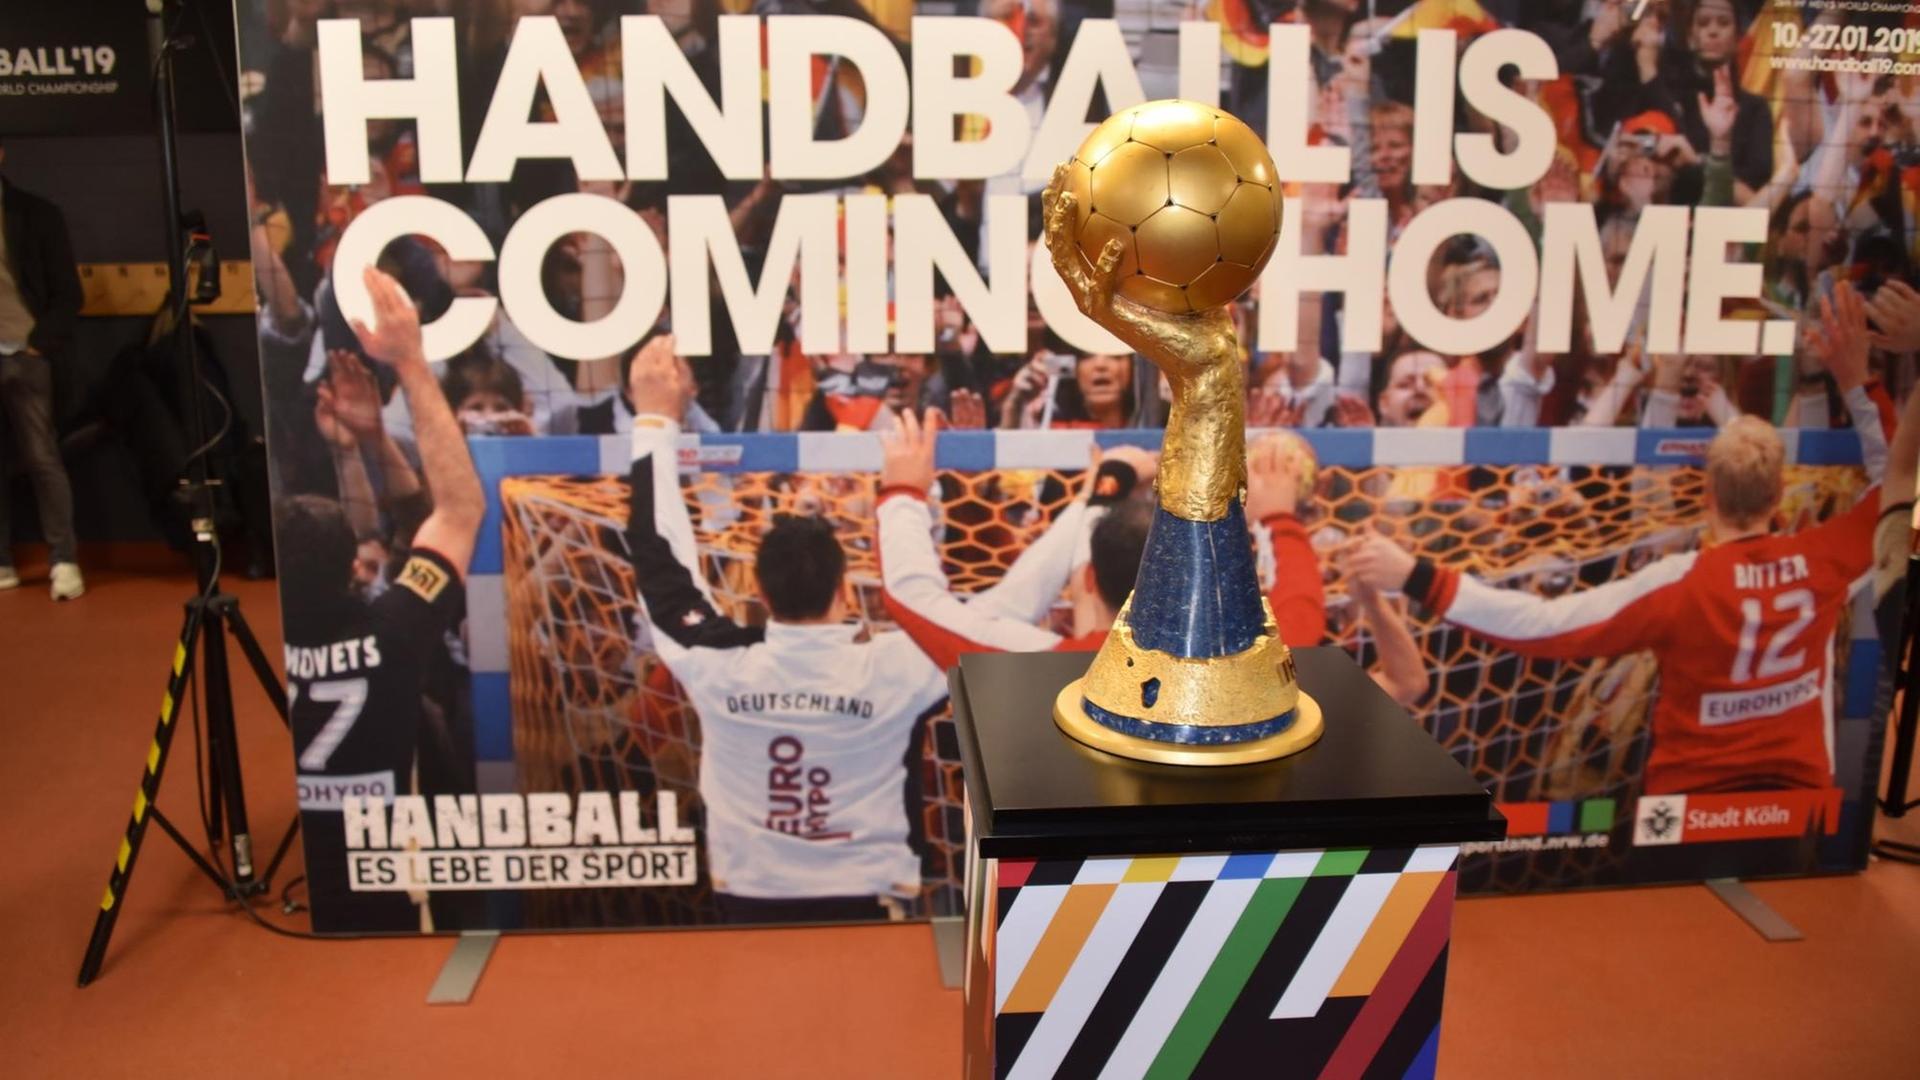 Der WM-Pokal der Handball-Weltmeisterschaft, dahinter ein Plakat mit der Aufschrift "Handball ist coming home".